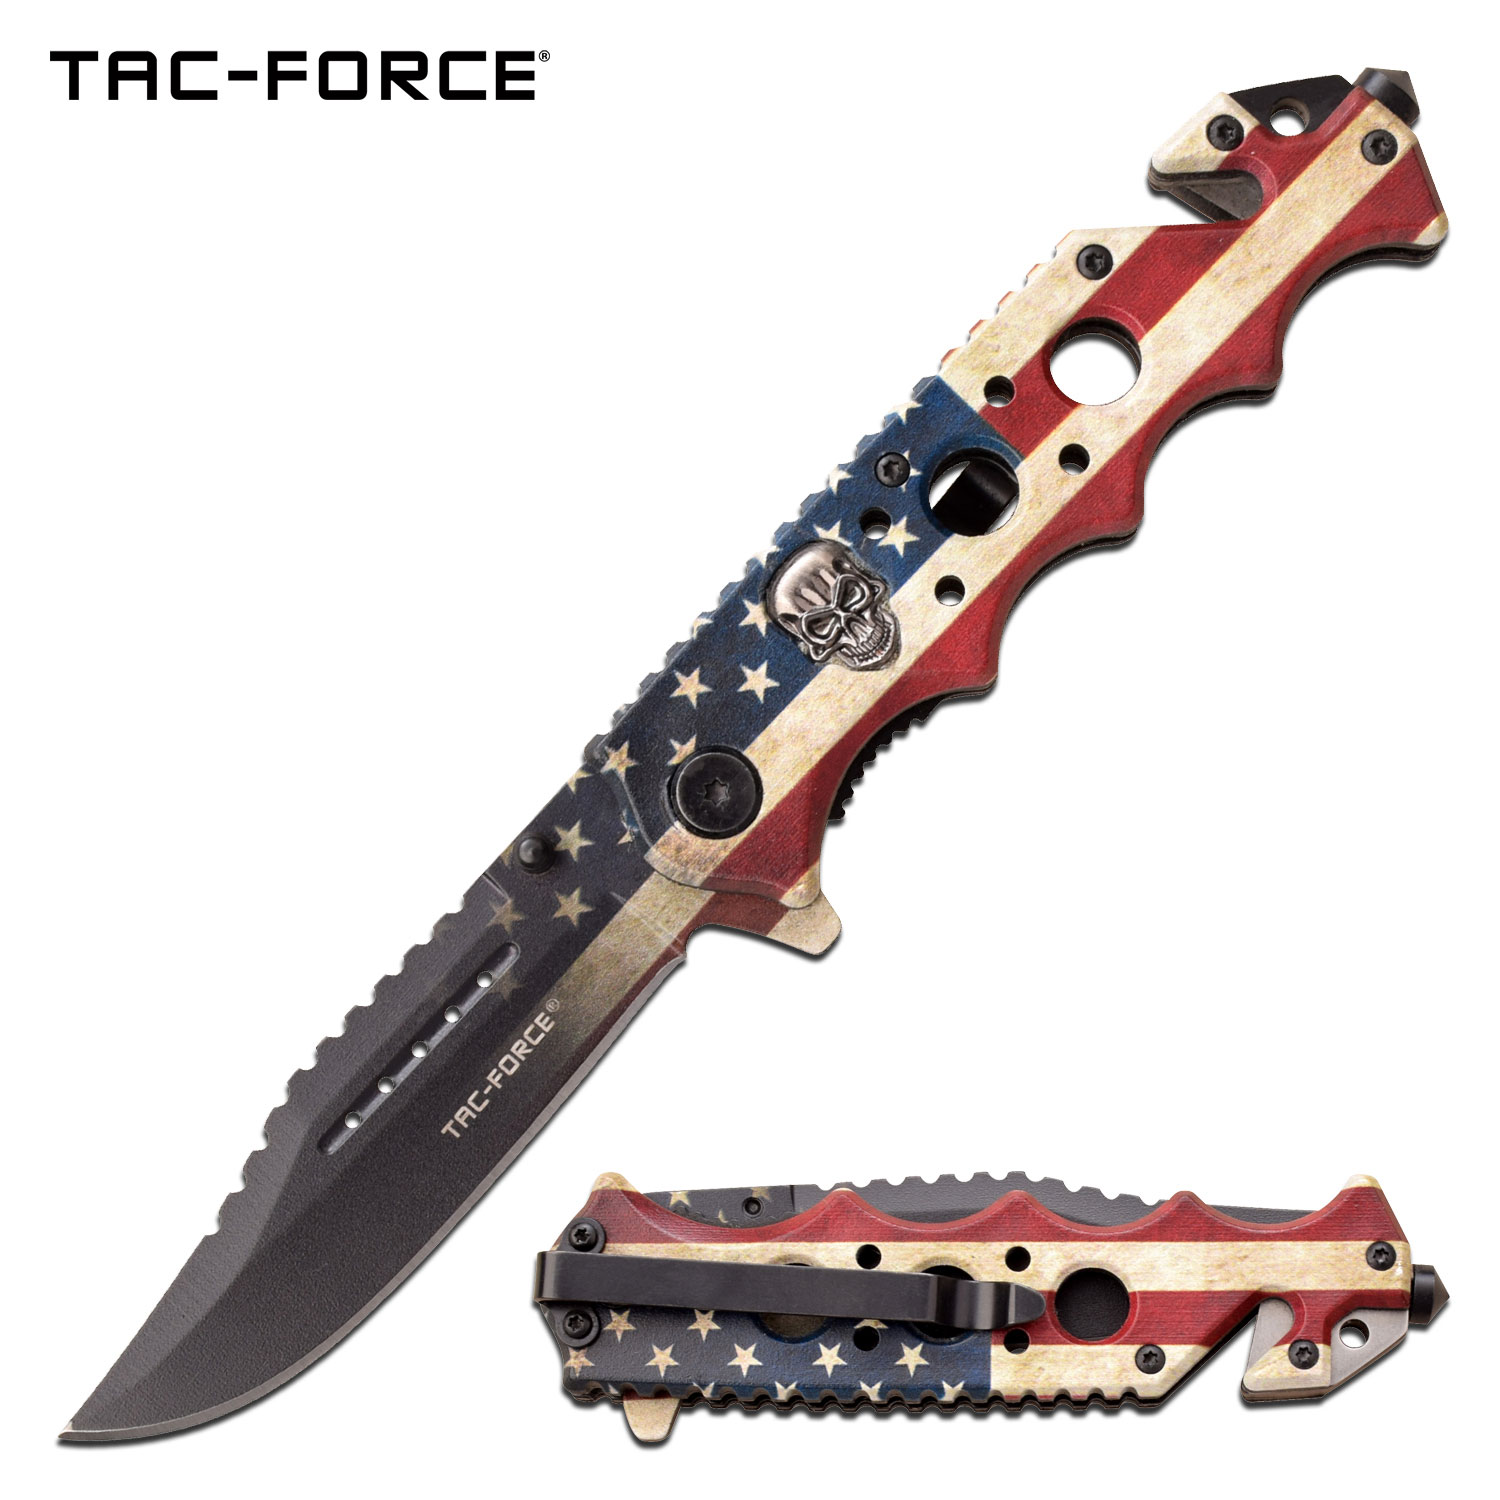 Spring-Assist Folding Knife | Tac-Force Battle-Worn American USA Flag with Skull